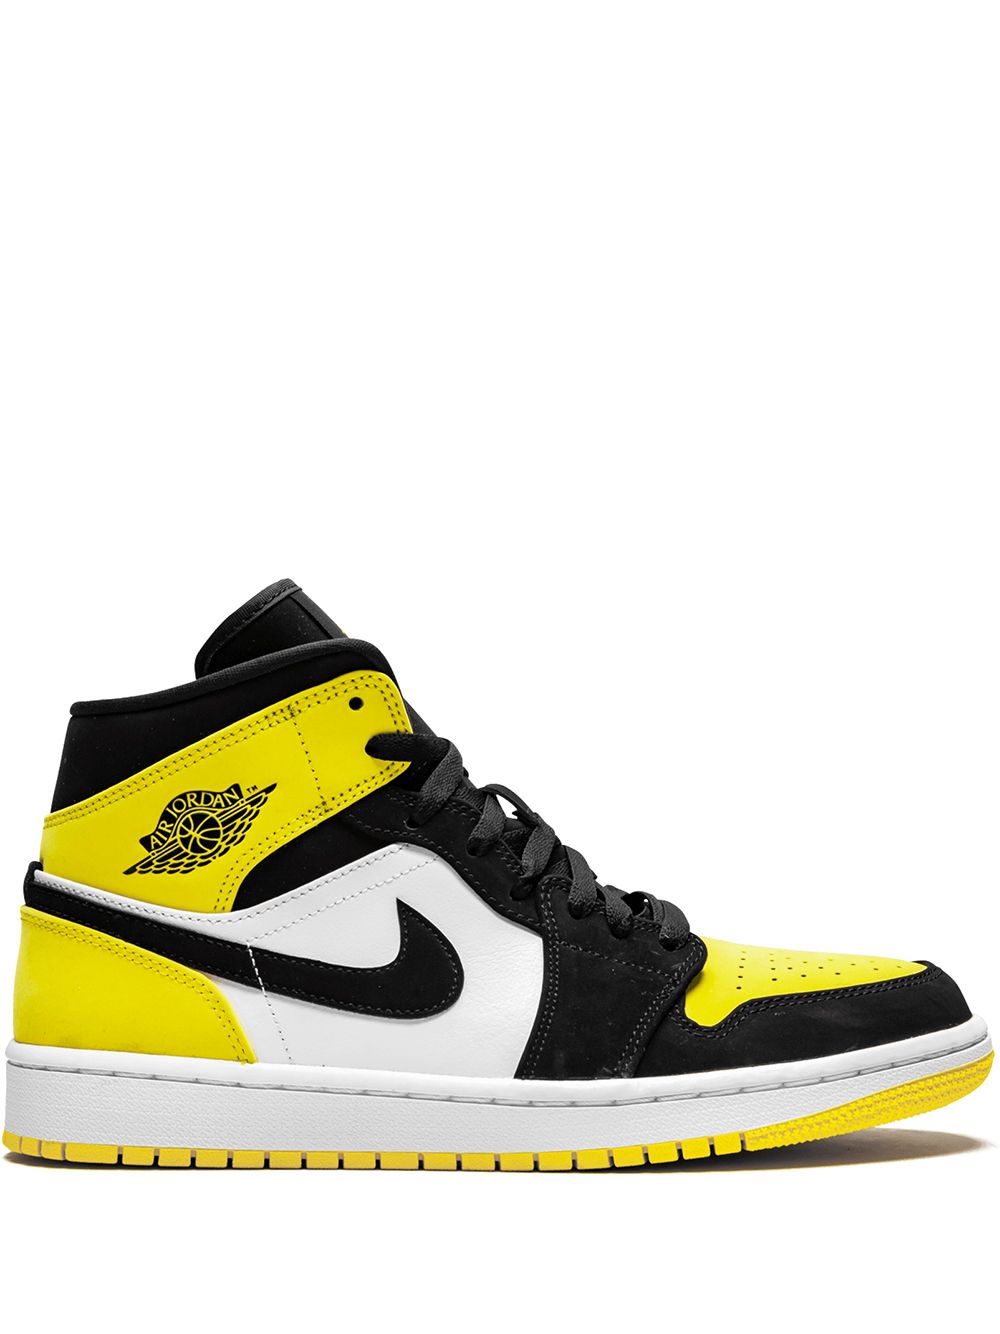 Jordan Air Jordan 1 Mid SE "Yellow Toe" sneakers - Black